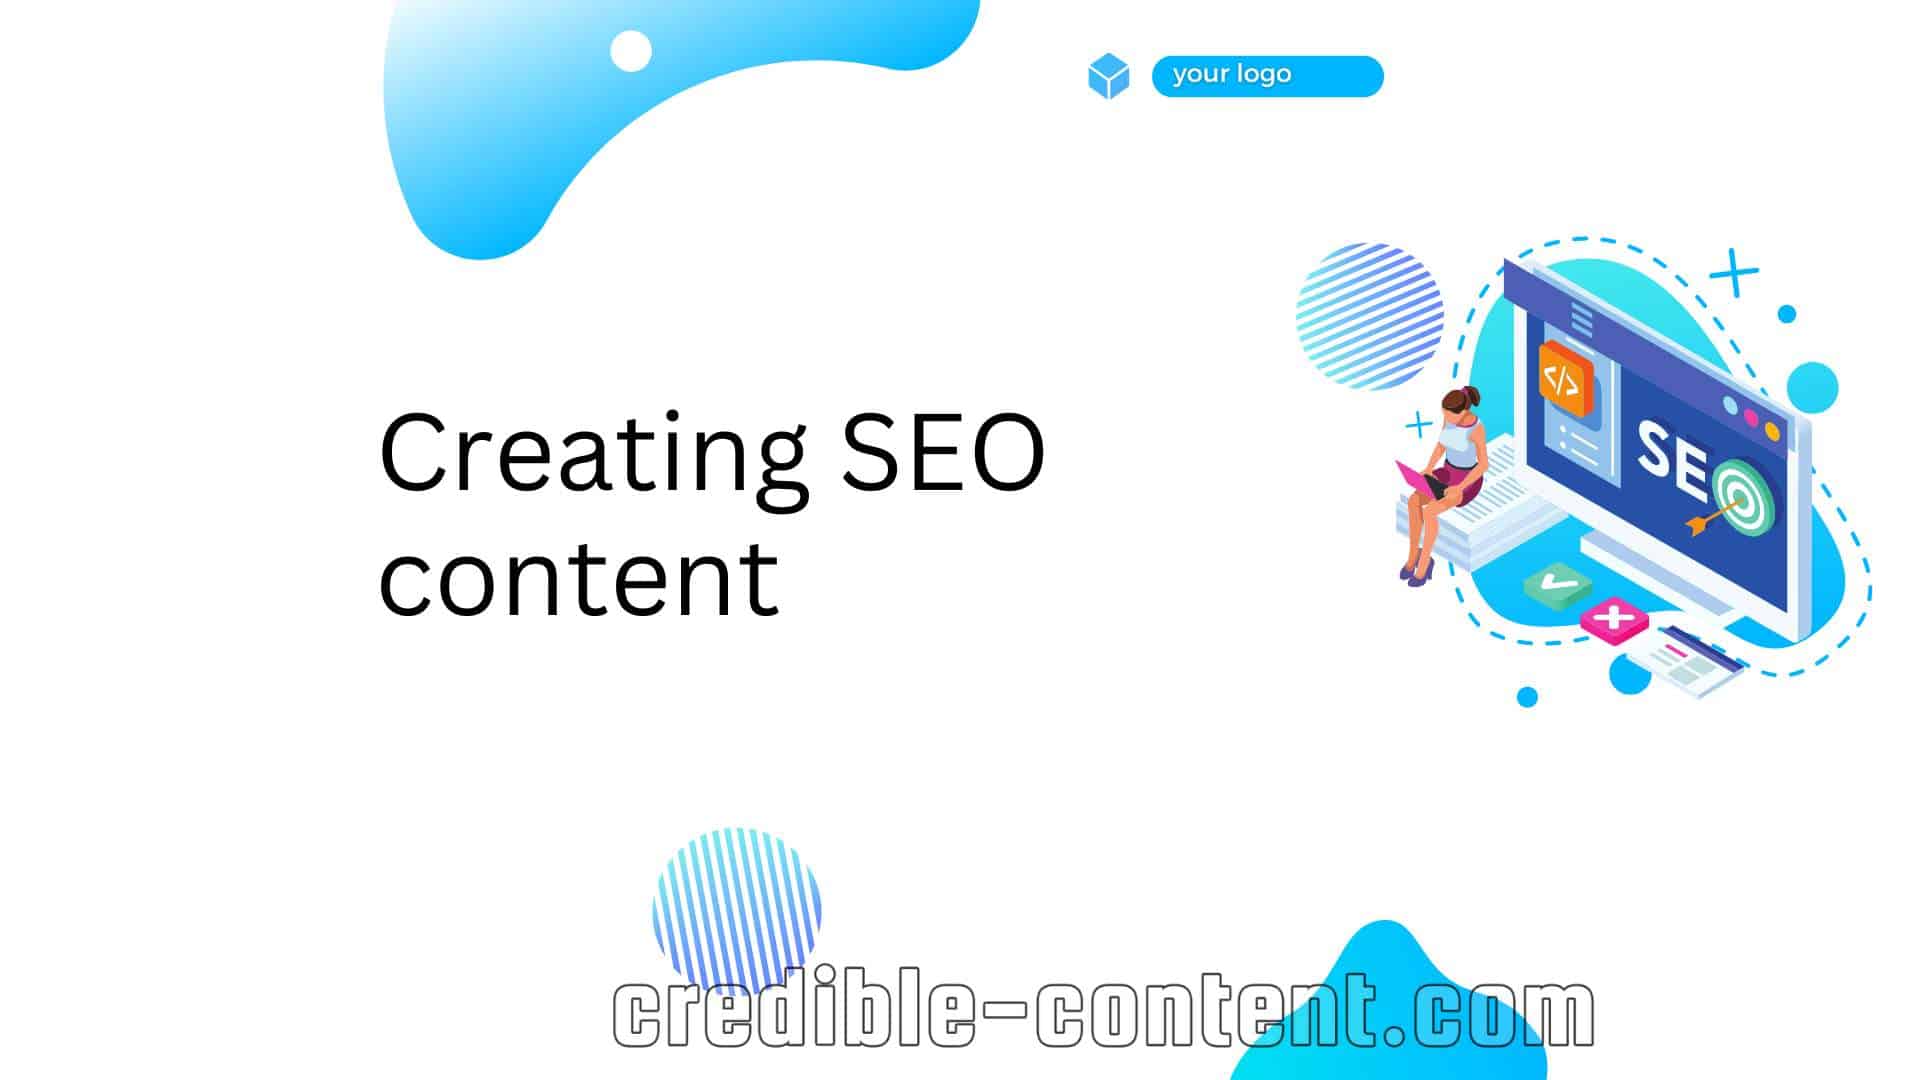 Creating SEO content